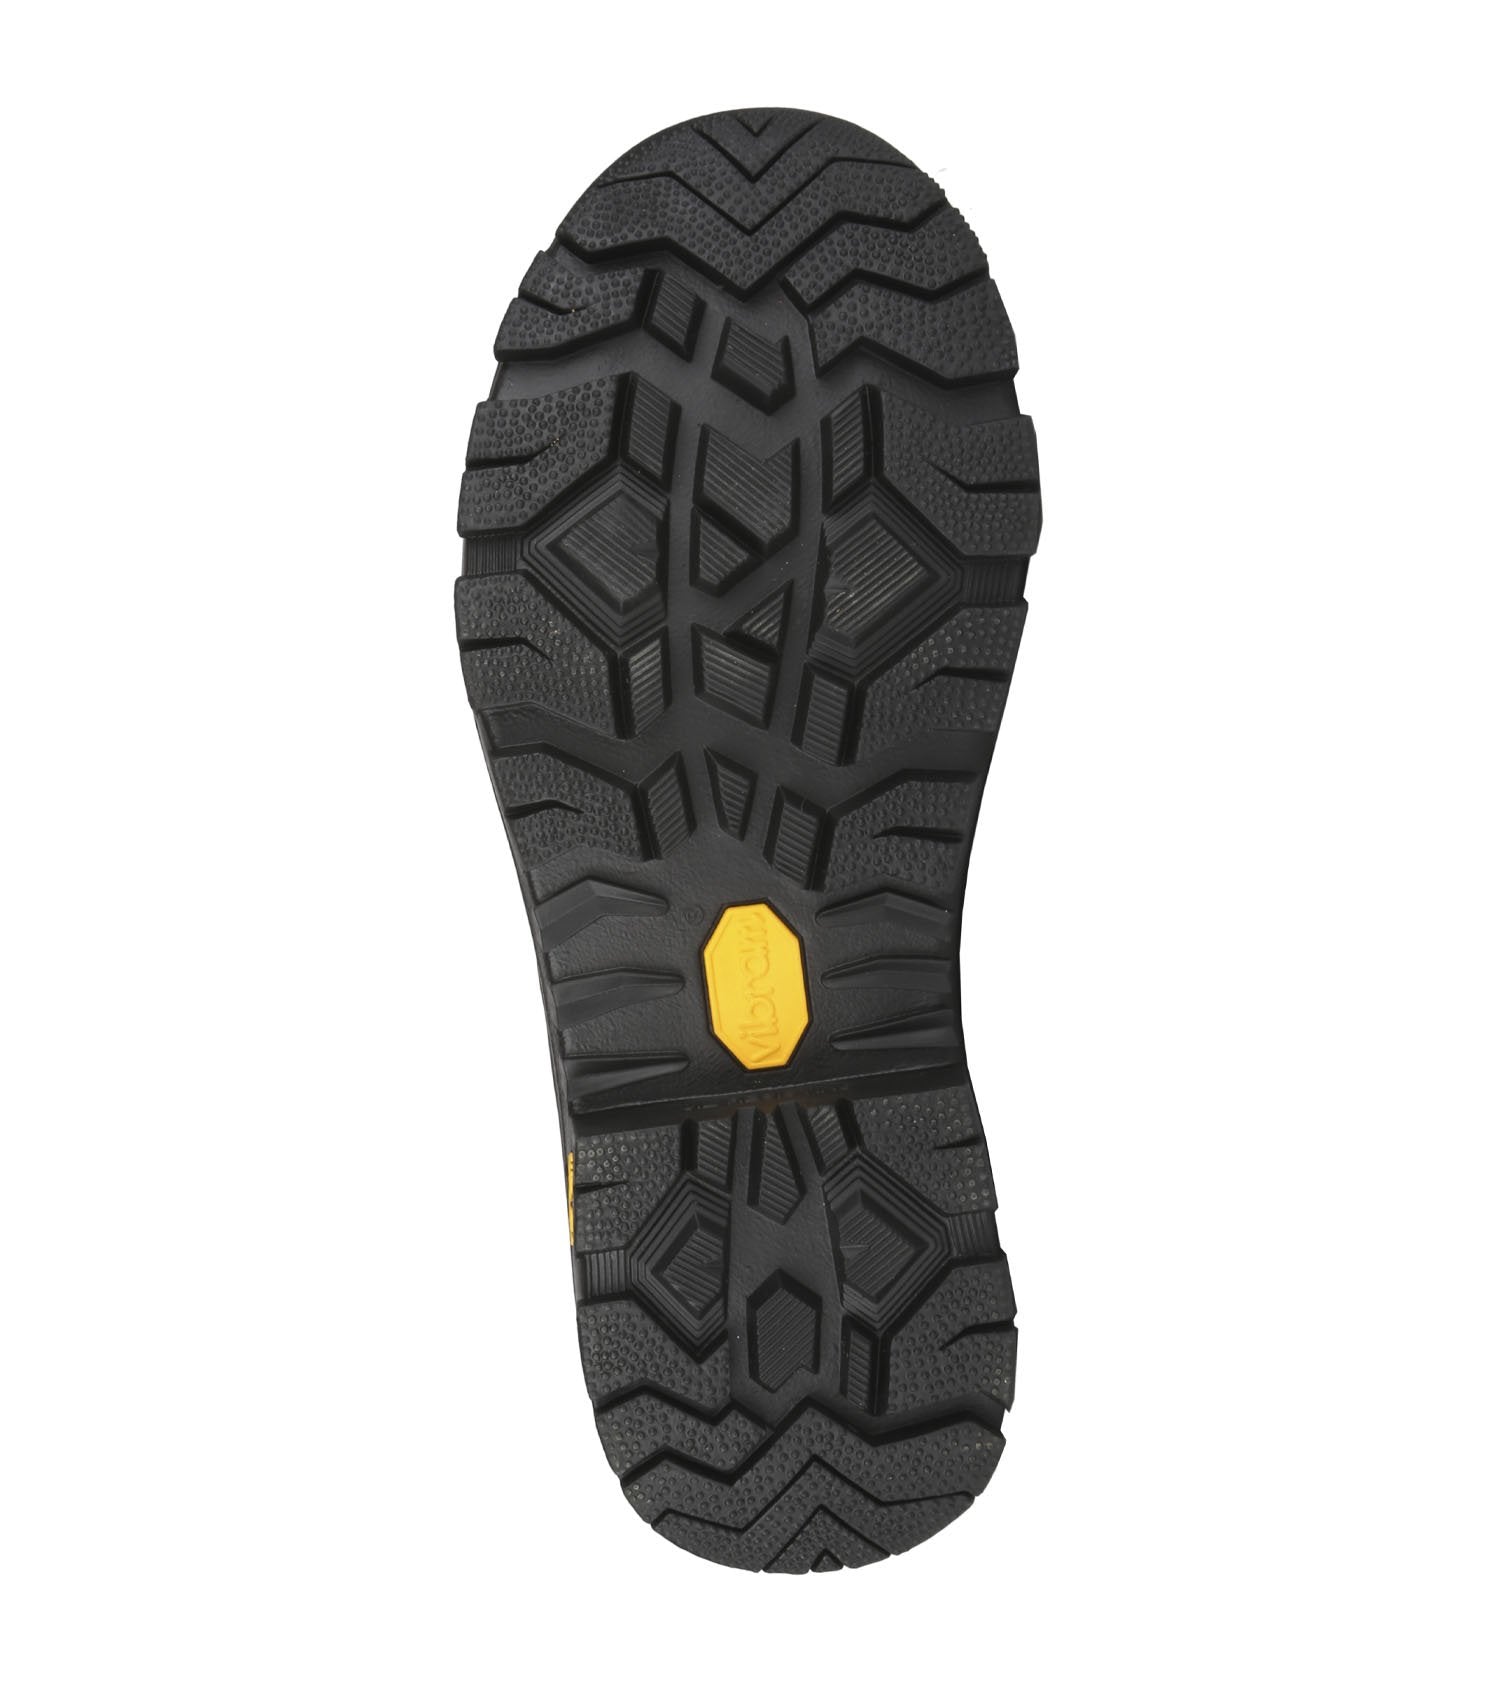 STC Alloy Composite Toe 8" External Metguard Men's Safety Work Boots | Black | Sizes 5 - 14 Work Boots - Cleanflow